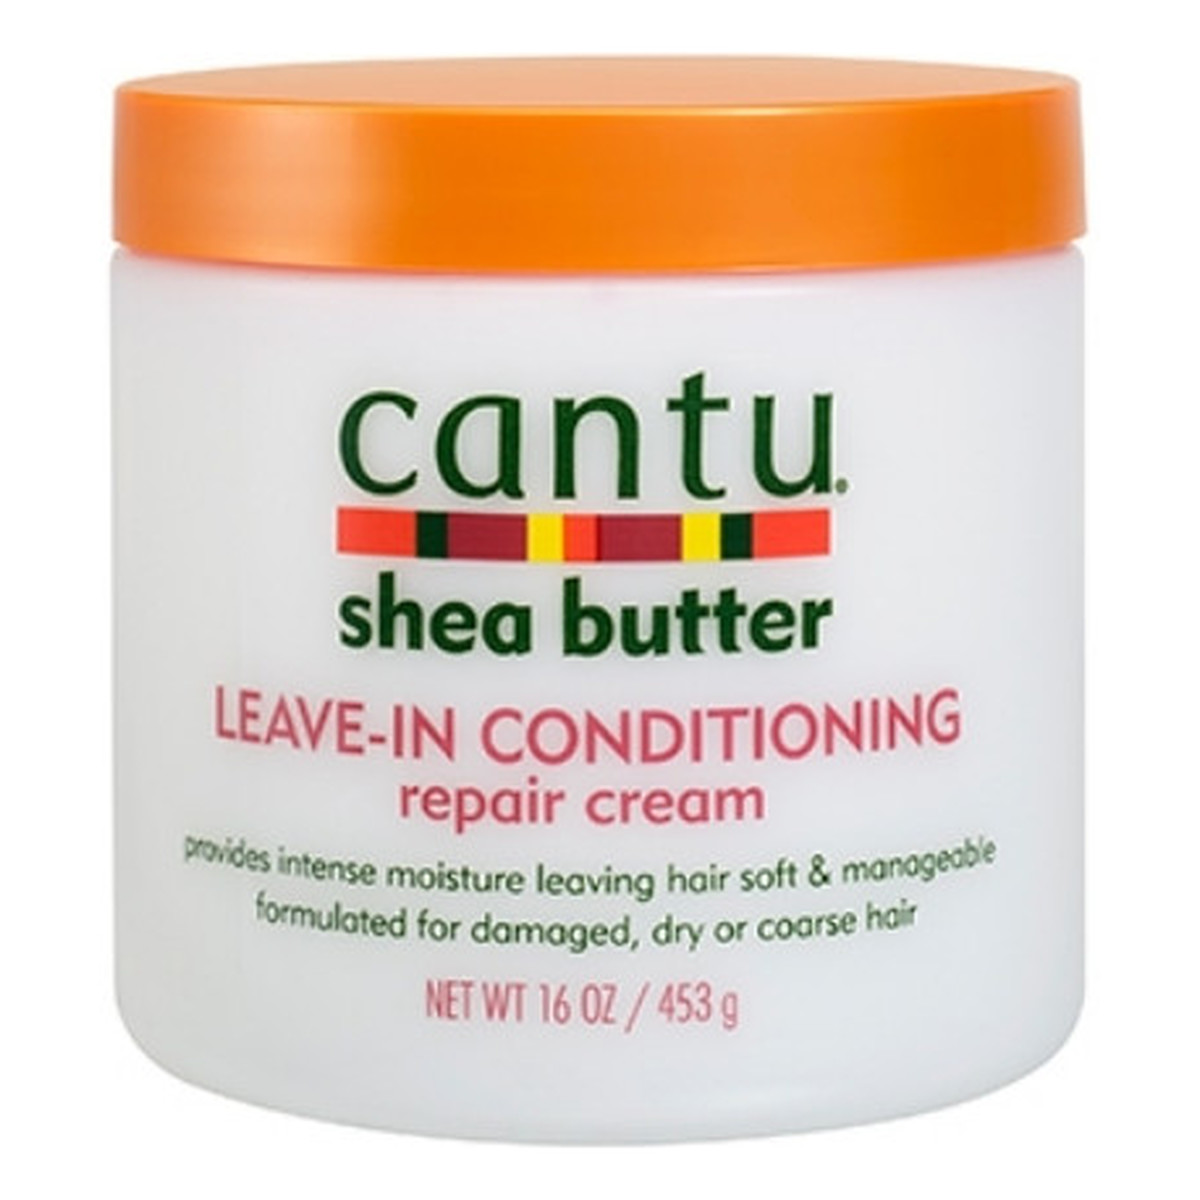 Cantu Shea Butter Leave-in Conditioning Repair Cream - odżywka do włosów osłabionych 453g